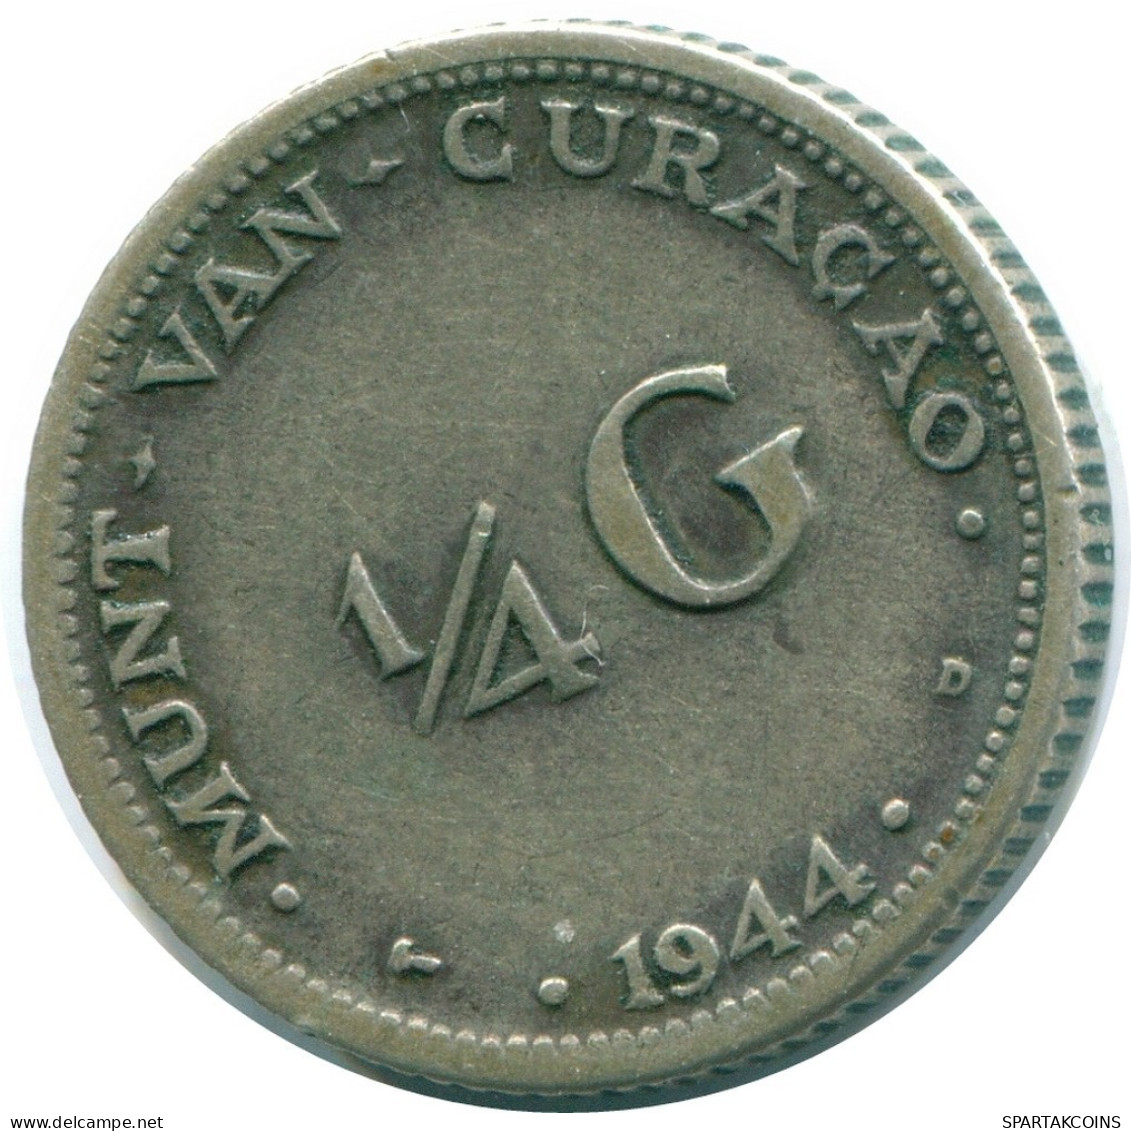 1/4 GULDEN 1944 CURACAO NIEDERLANDE SILBER Koloniale Münze #NL10695.4.D.A - Curaçao